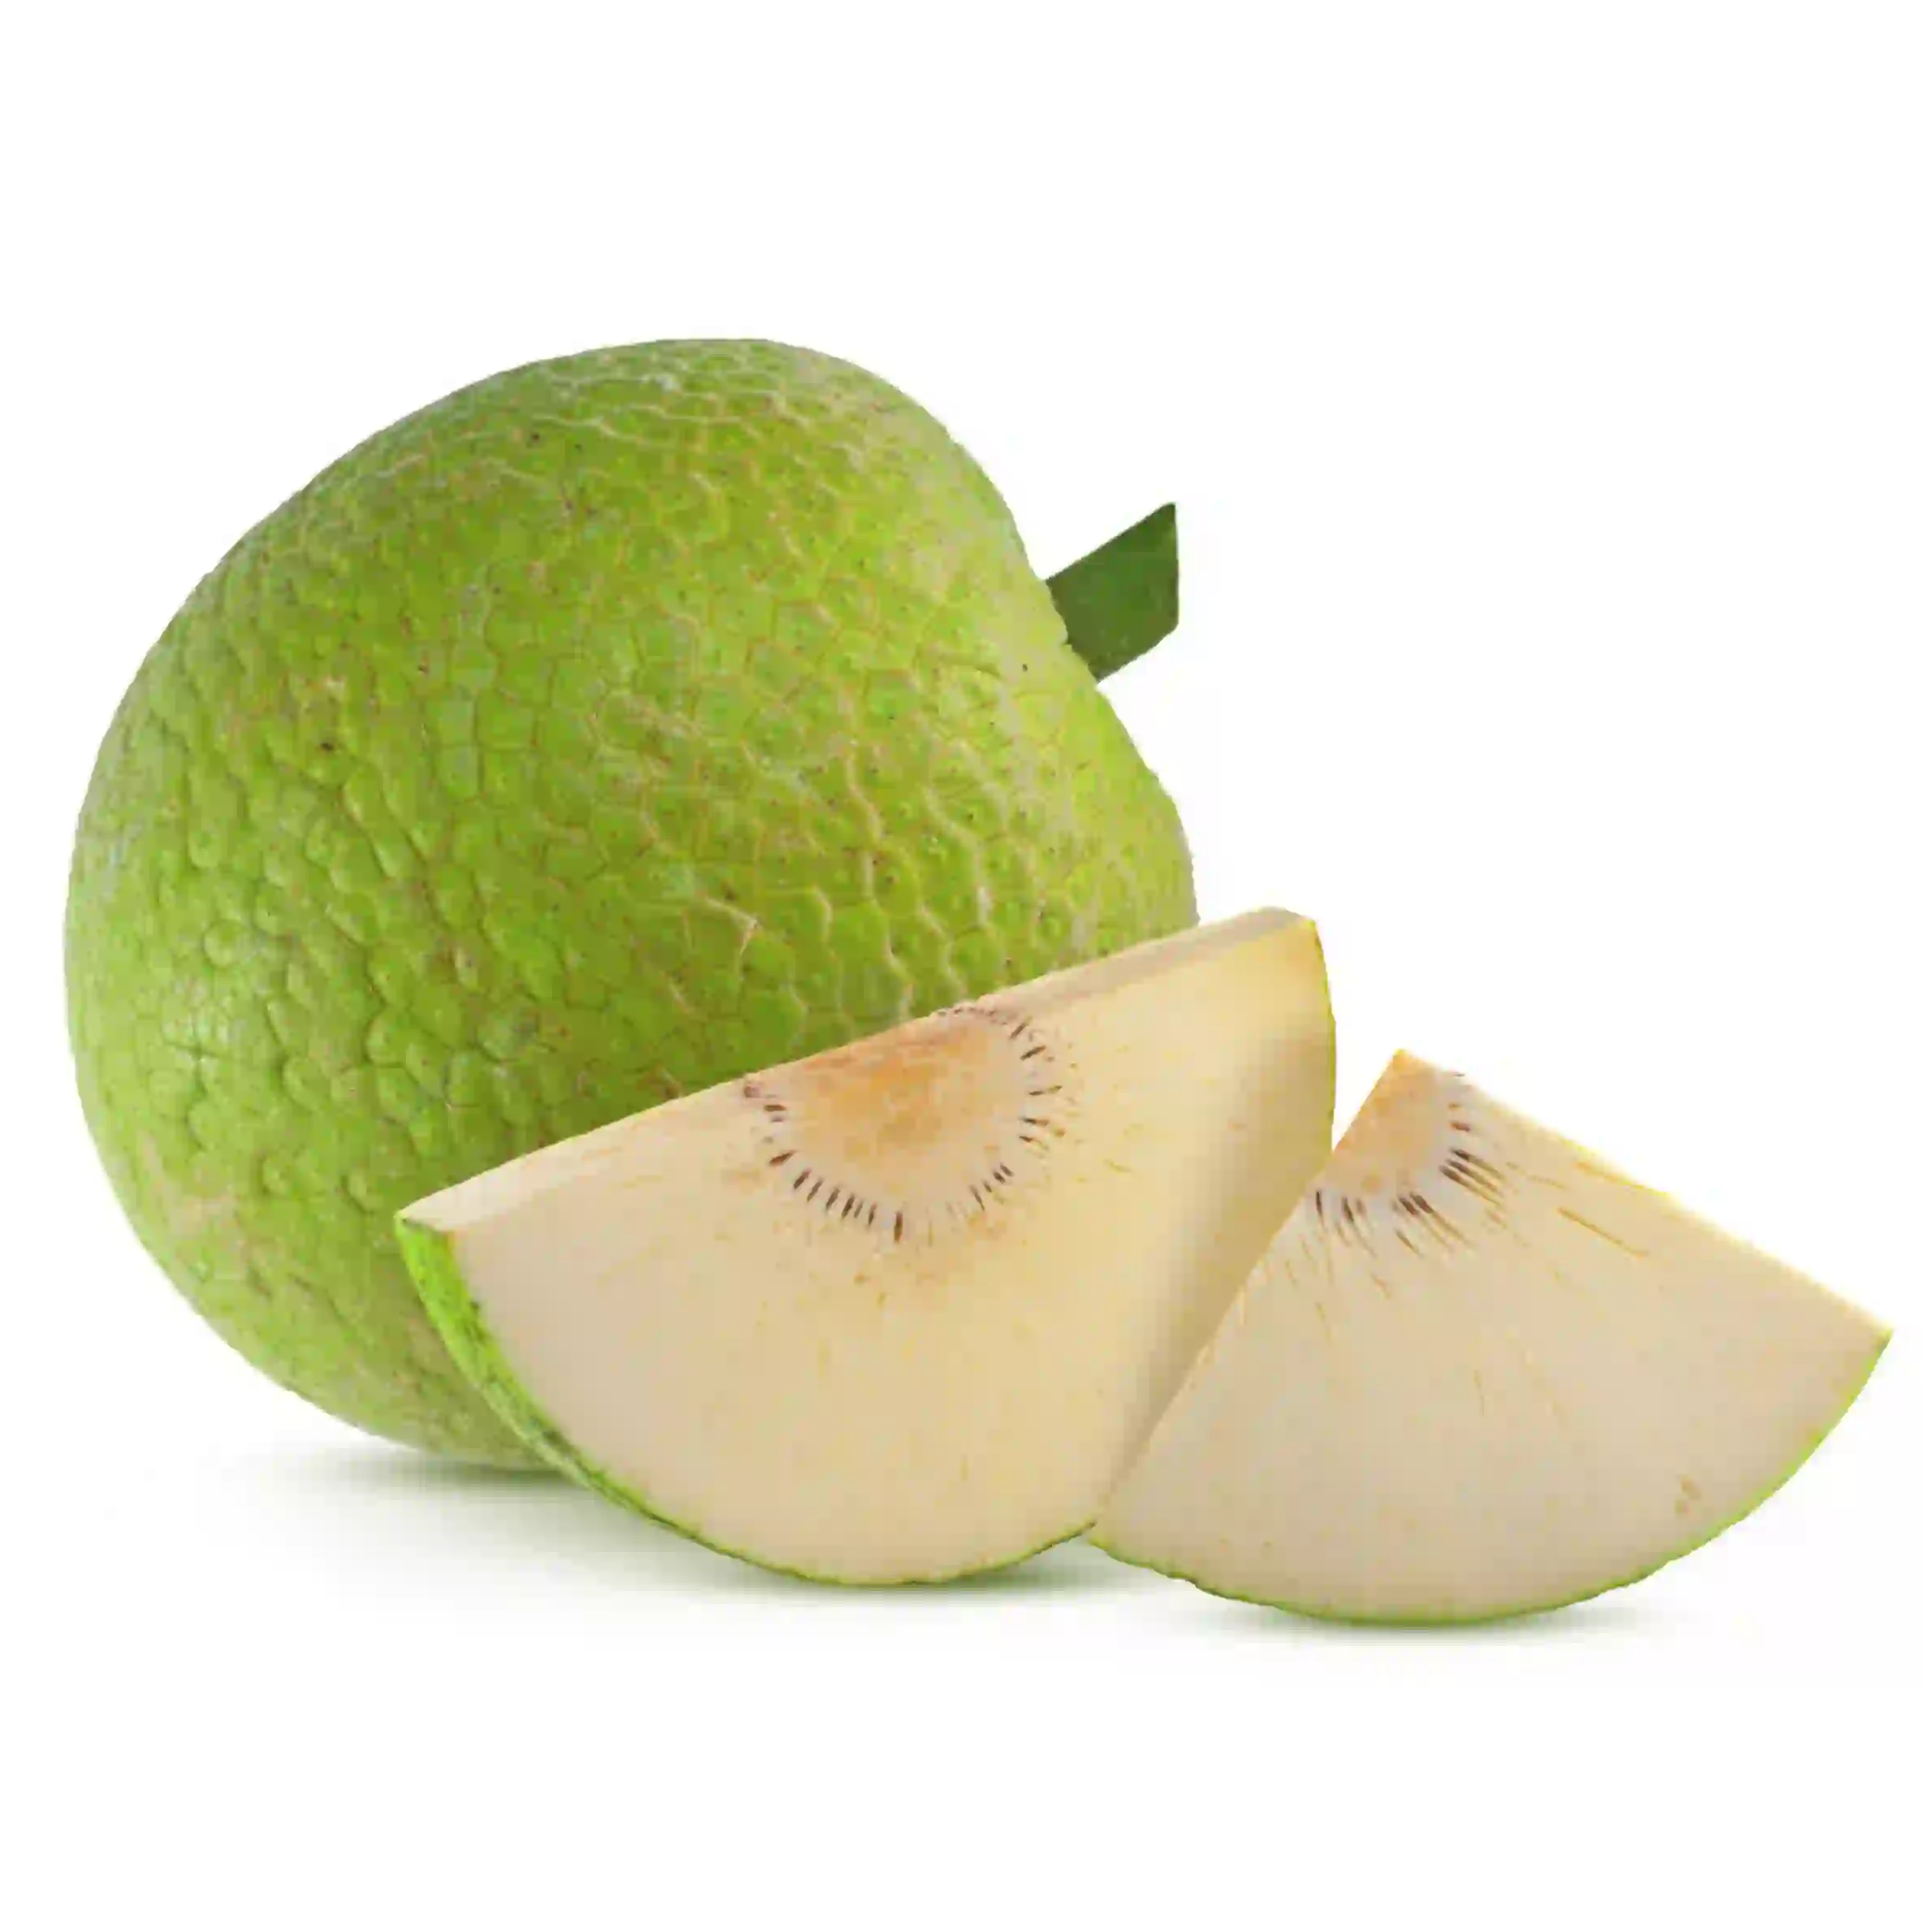 Breadfruit Fruit